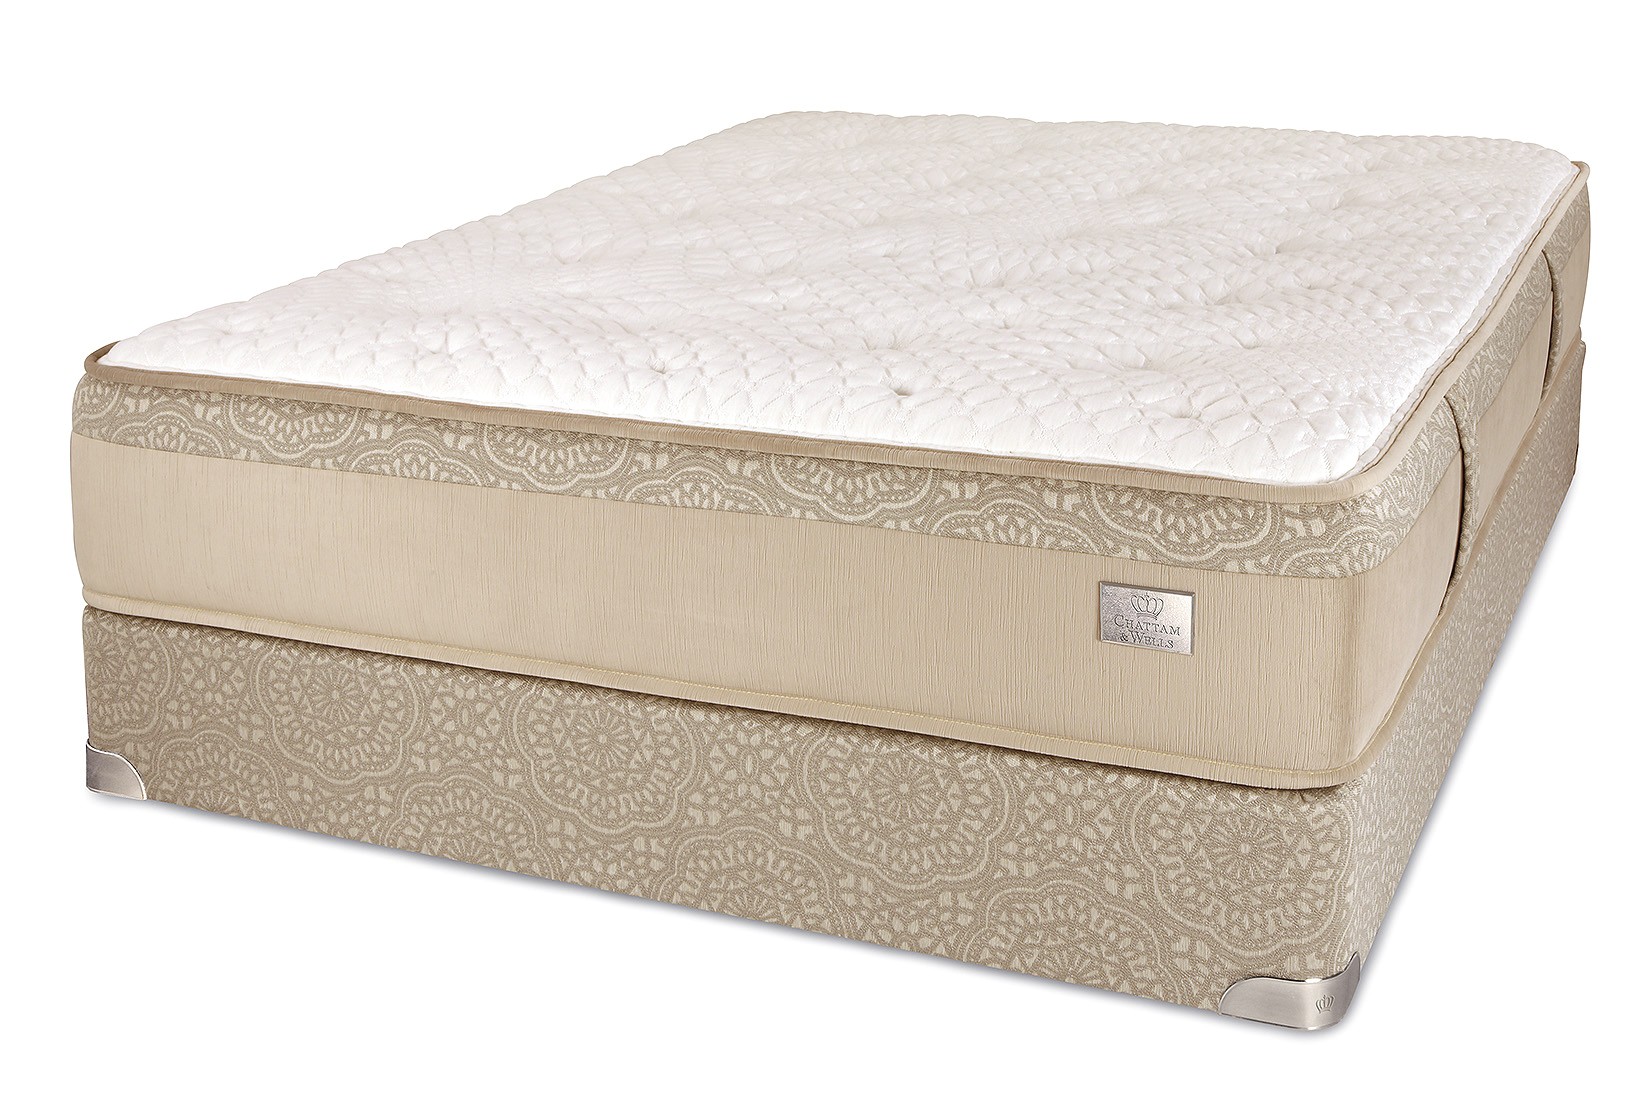 chattam and wells catherine mattress reviews